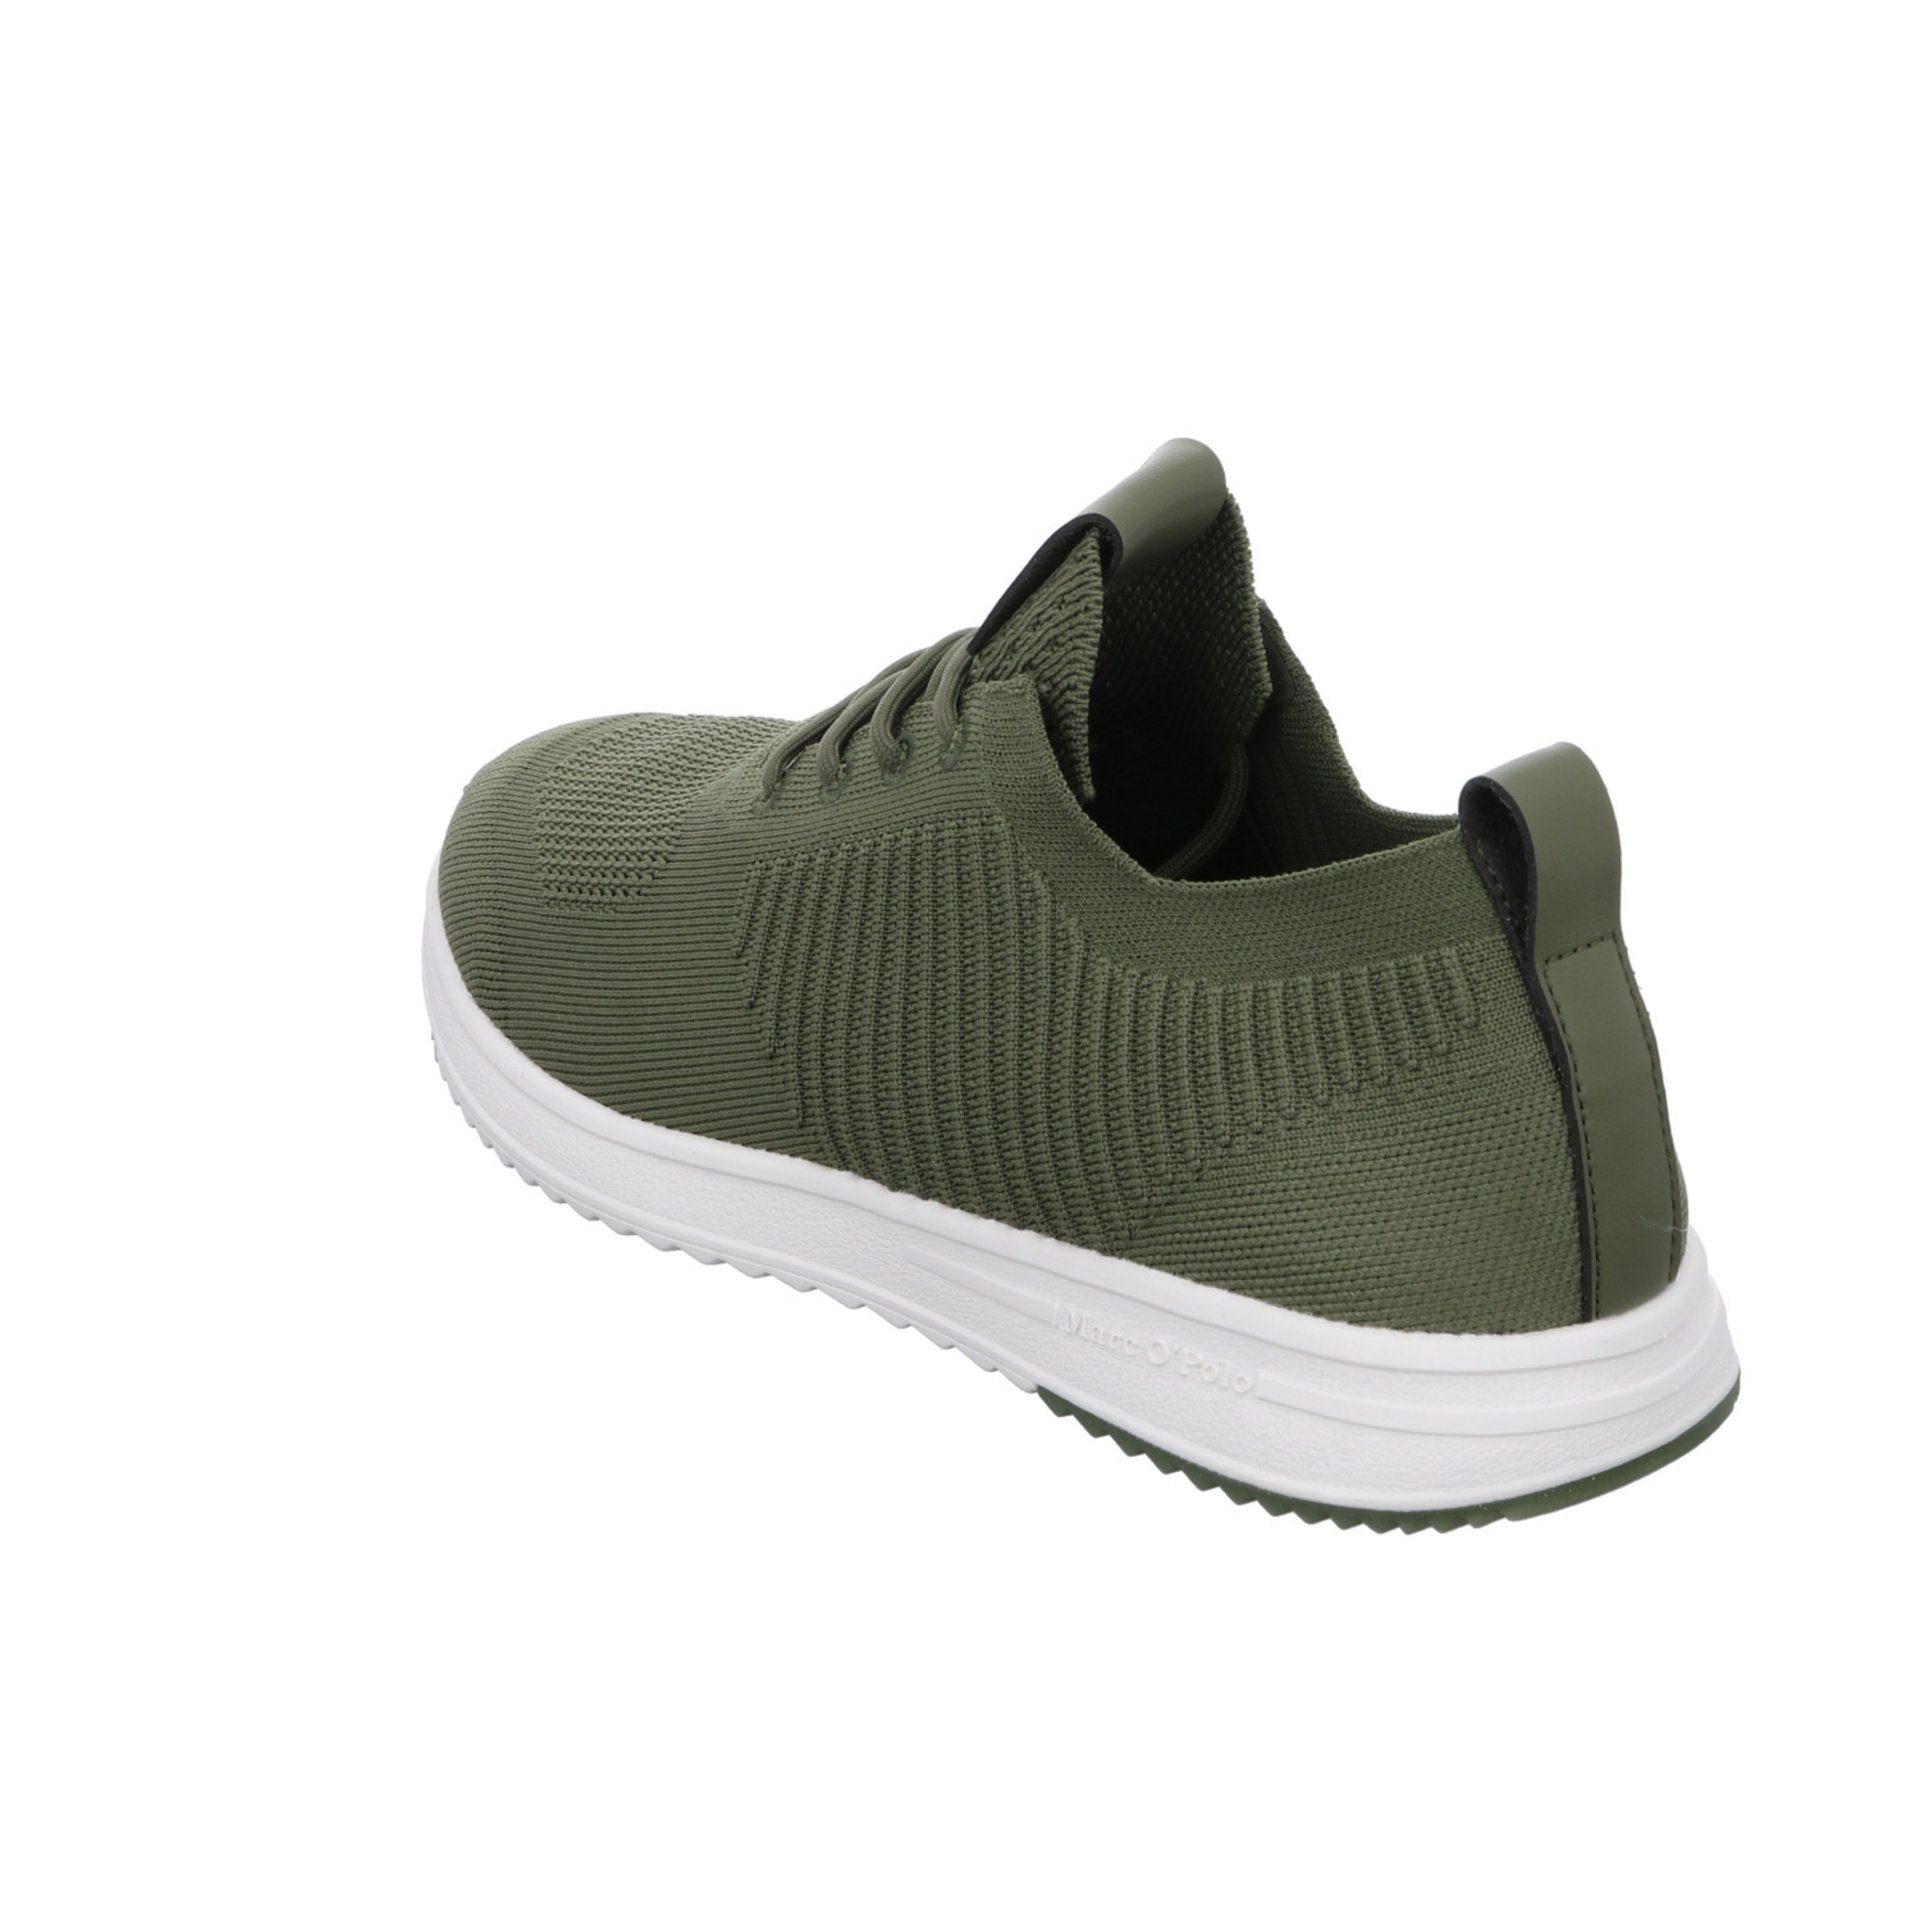 Slipper Schuhe Sneaker O'Polo Herren dunkel grün+petrol Textil Schnürschuh Jasper Marc